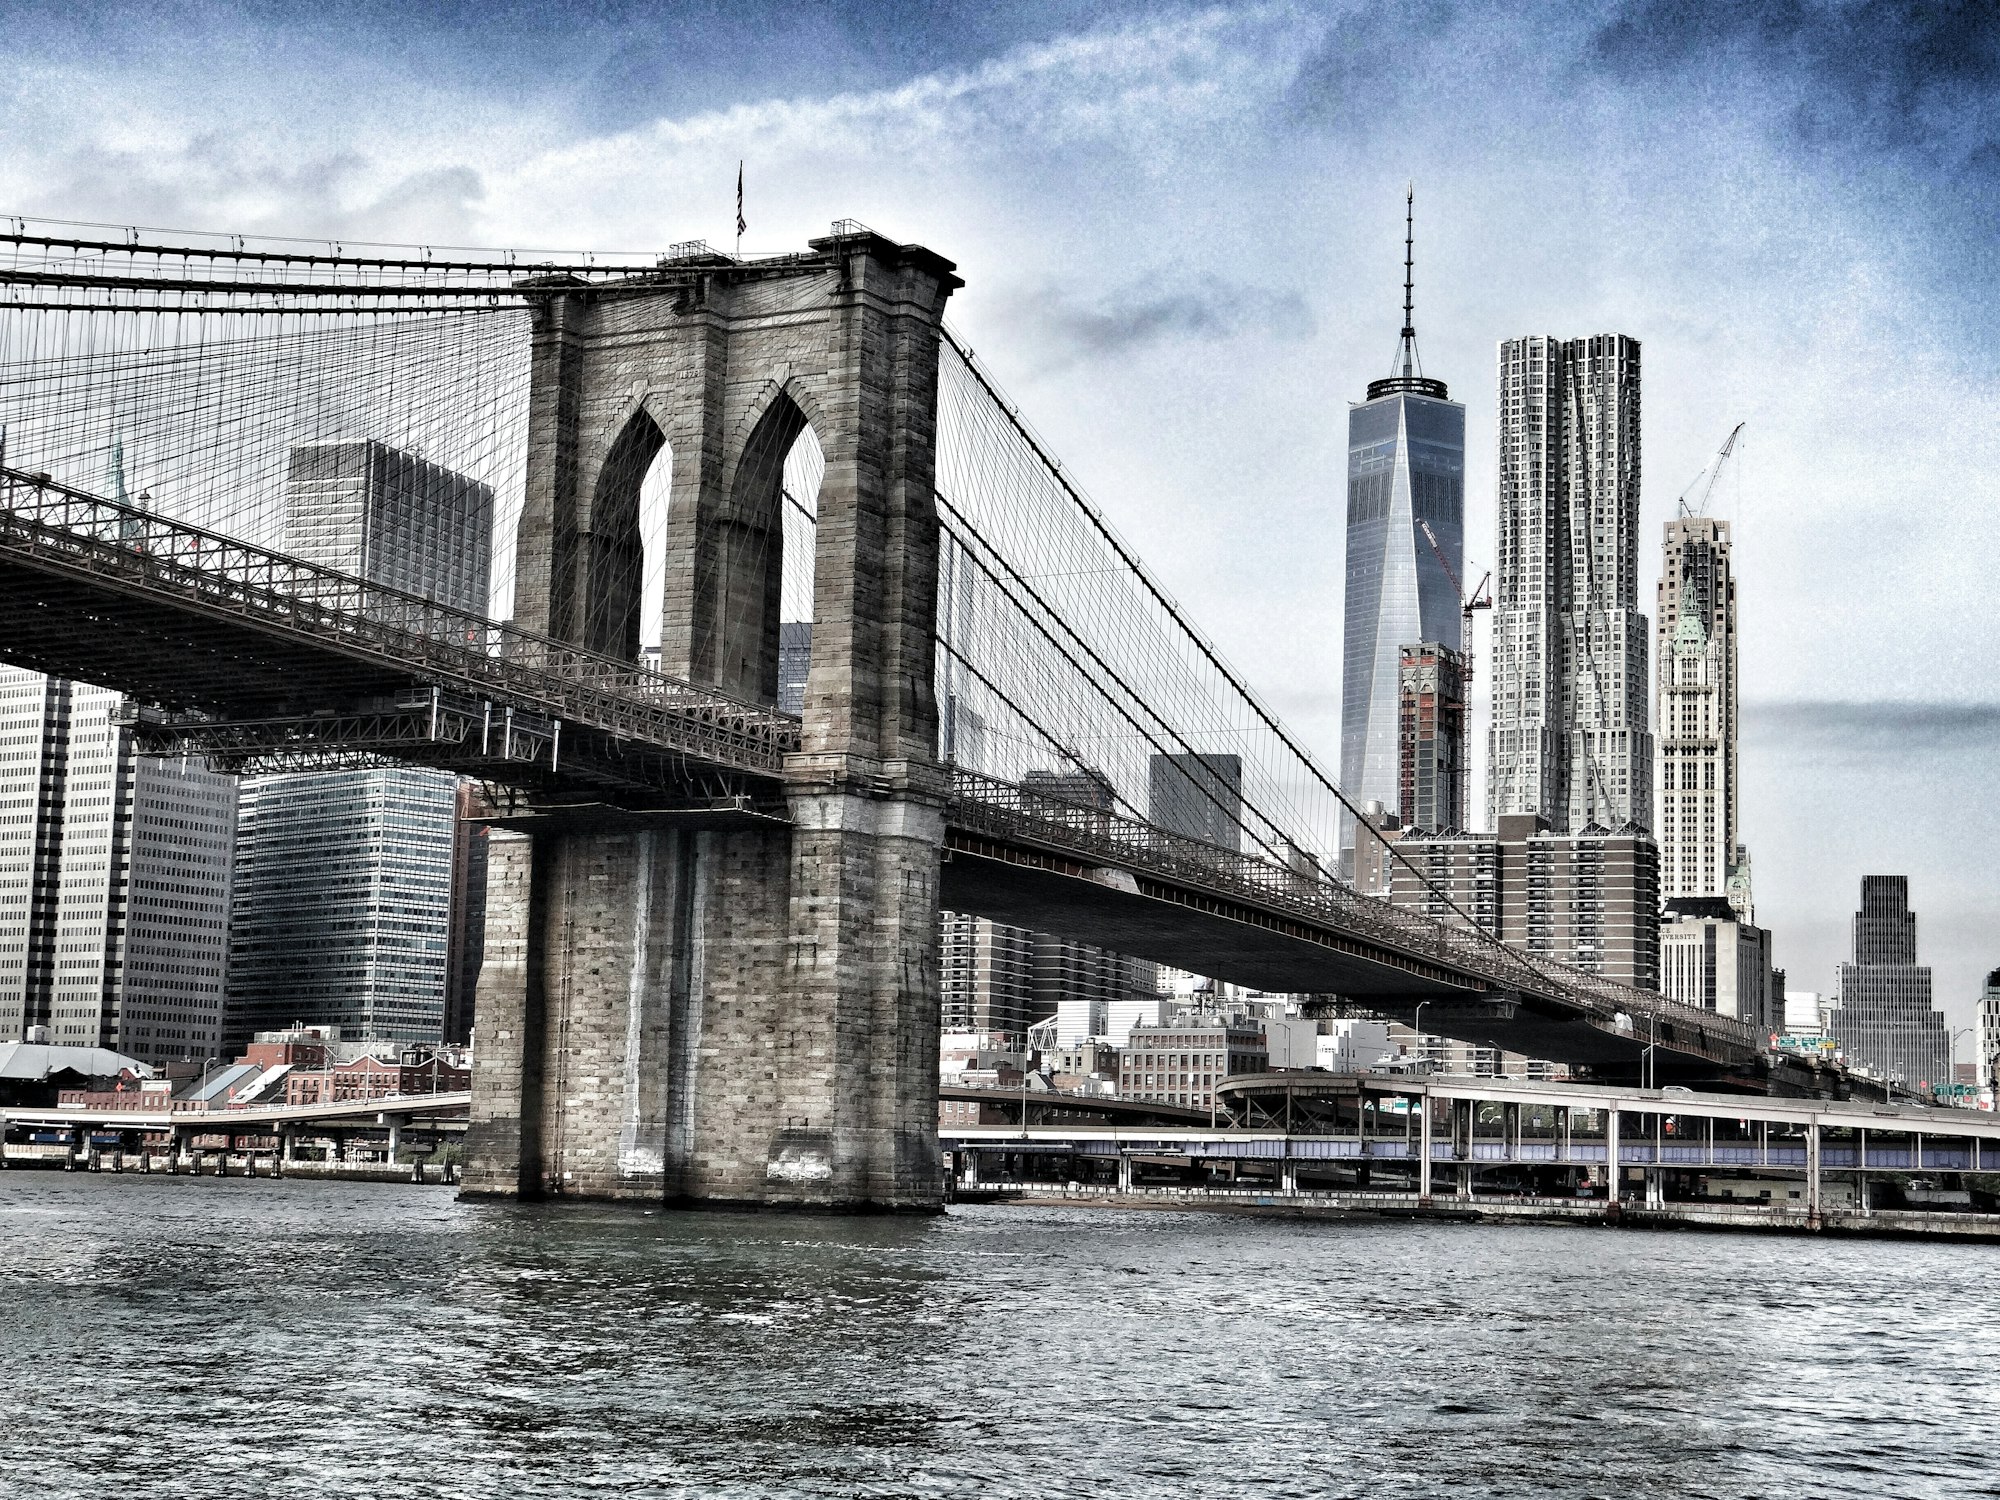 Let’s take a walk on the Brooklyn Bridge